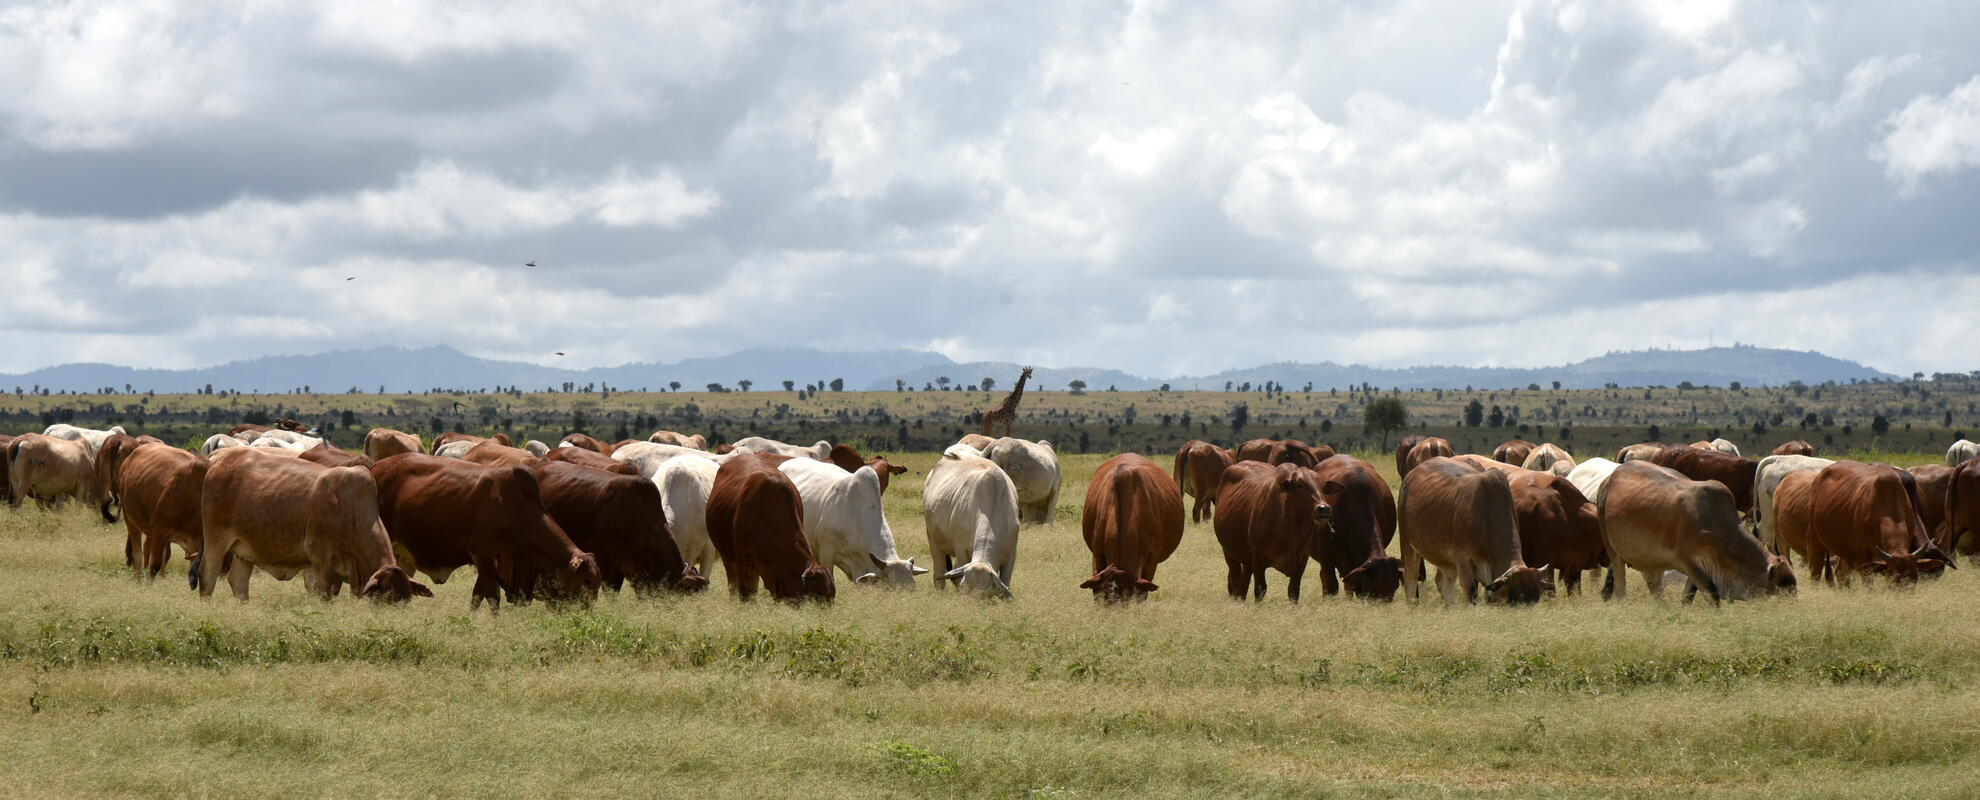 Circulation of antibiotic resistance genes at the wildlife–livestock interface in Kapiti, Kenya